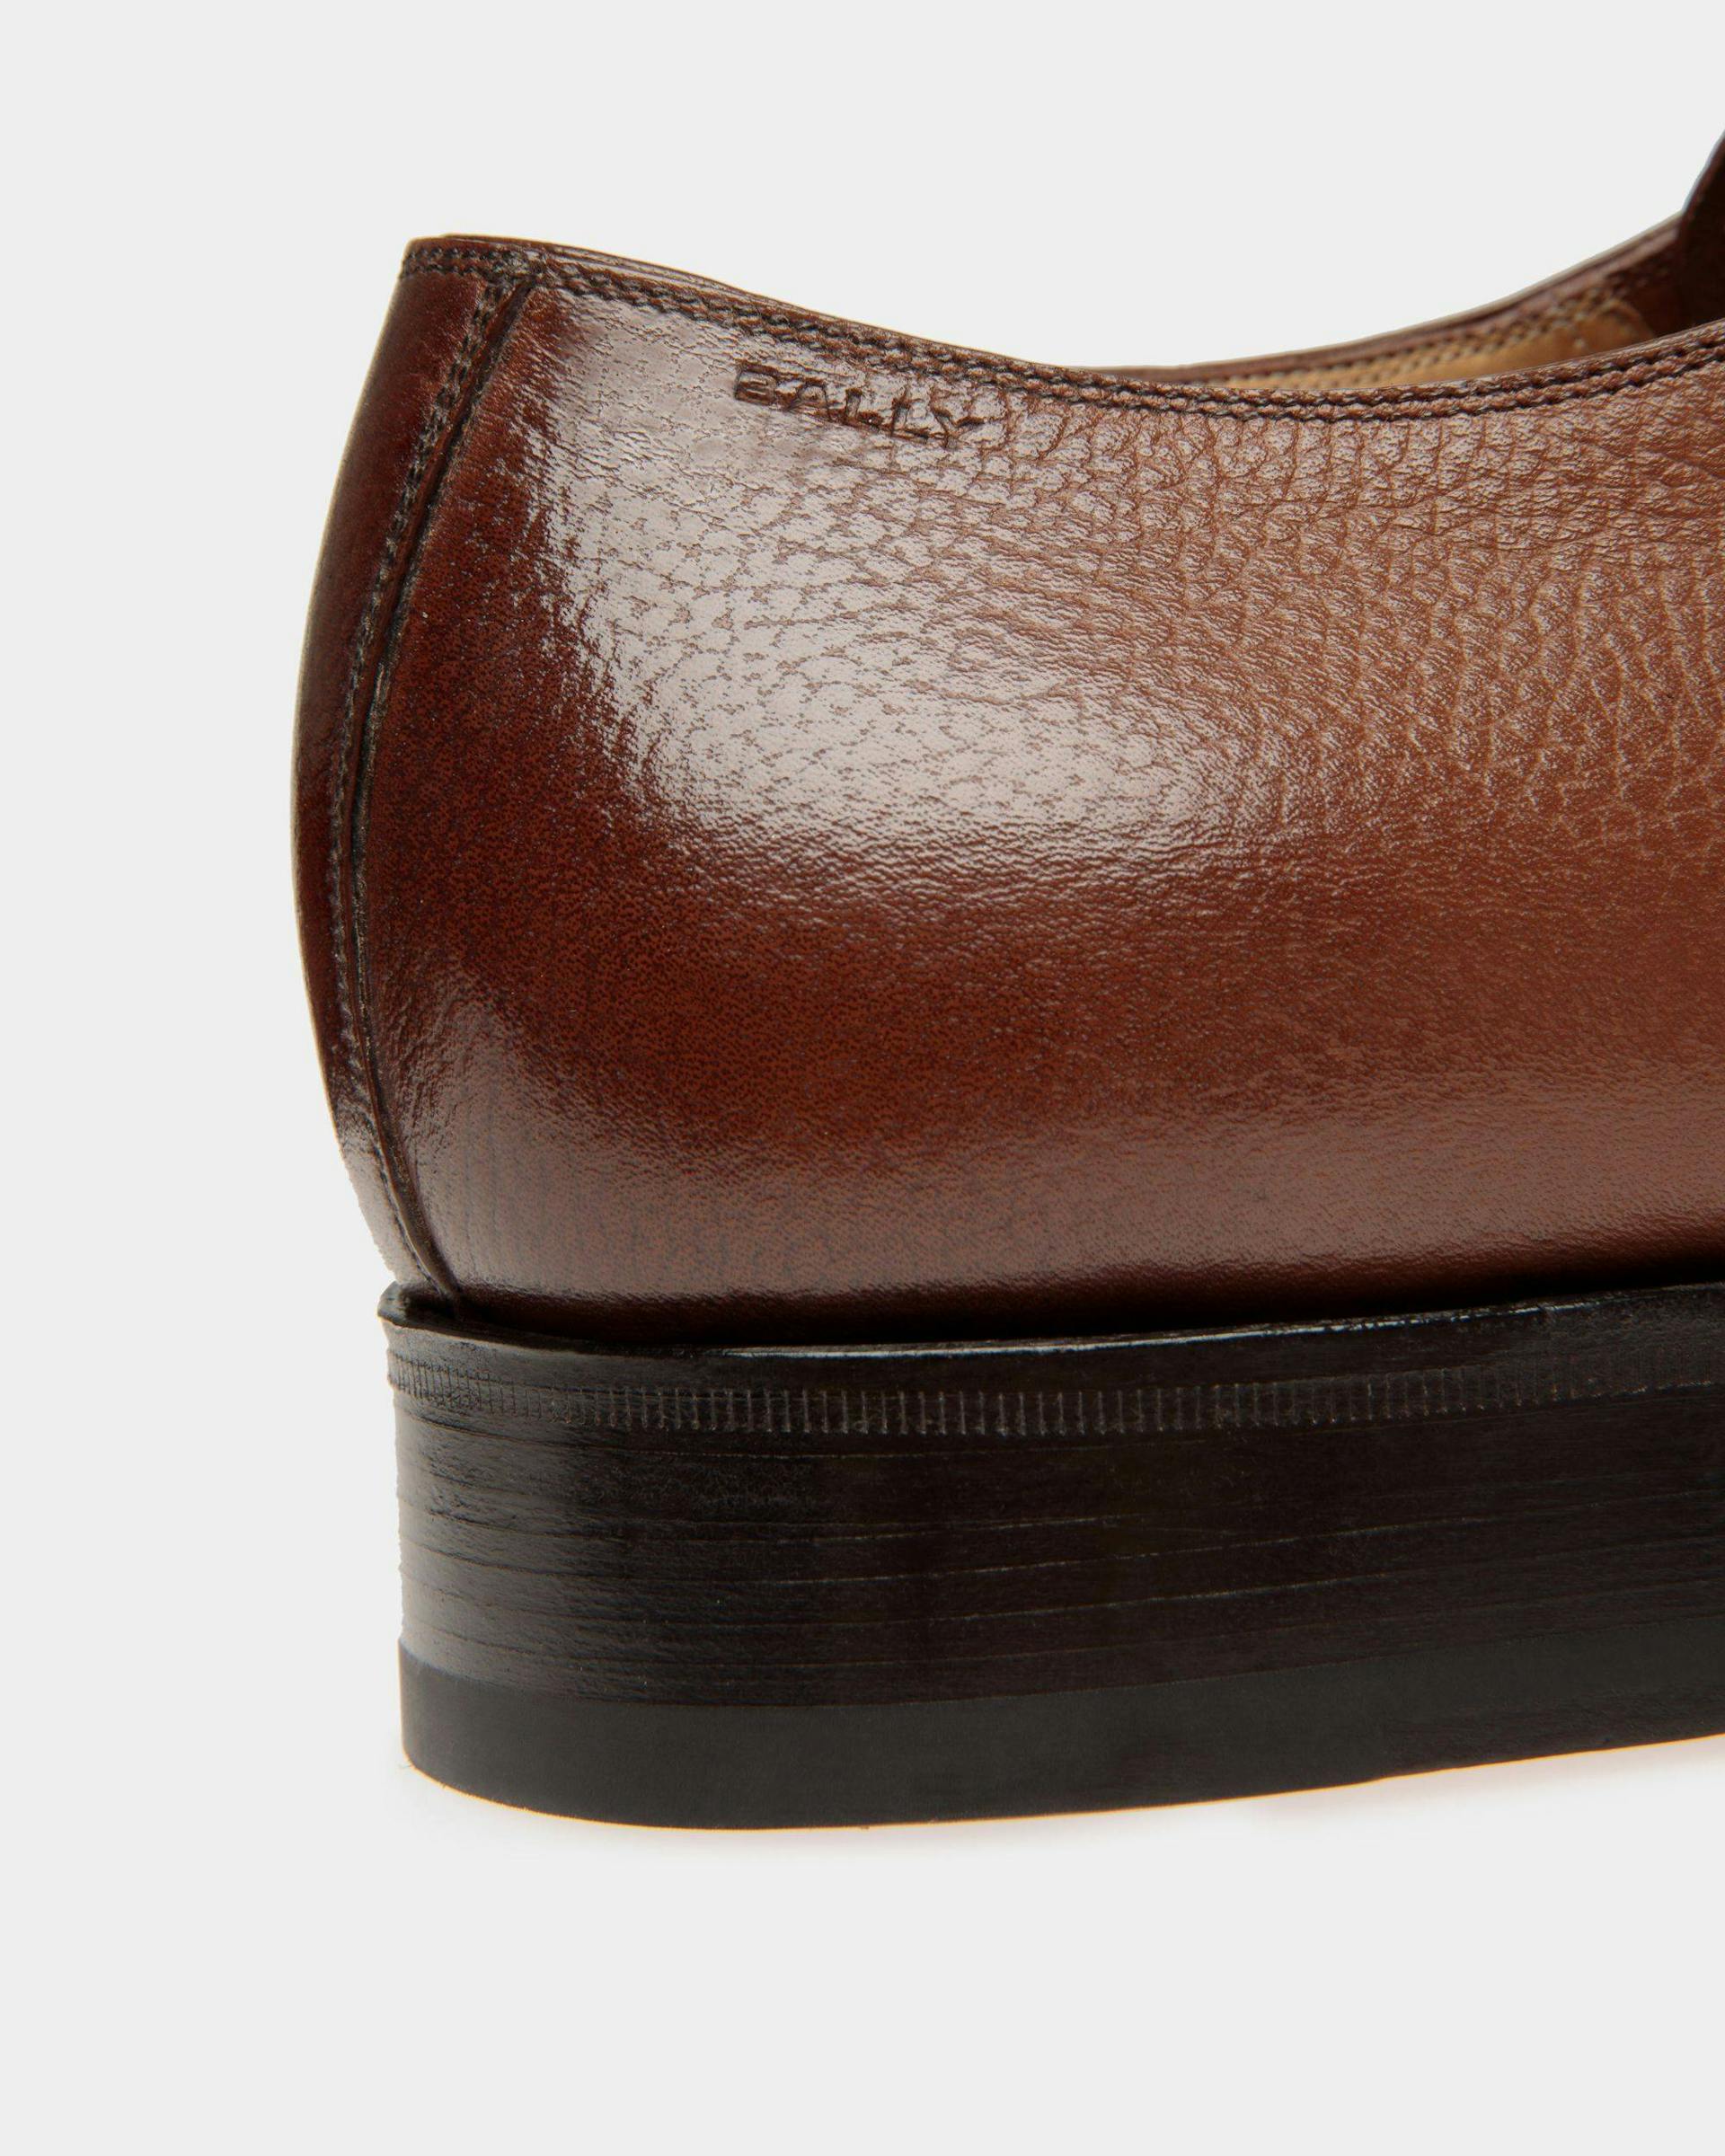 Men's Schoenen Loafer in Embossed Leather | Bally | Still Life Detail